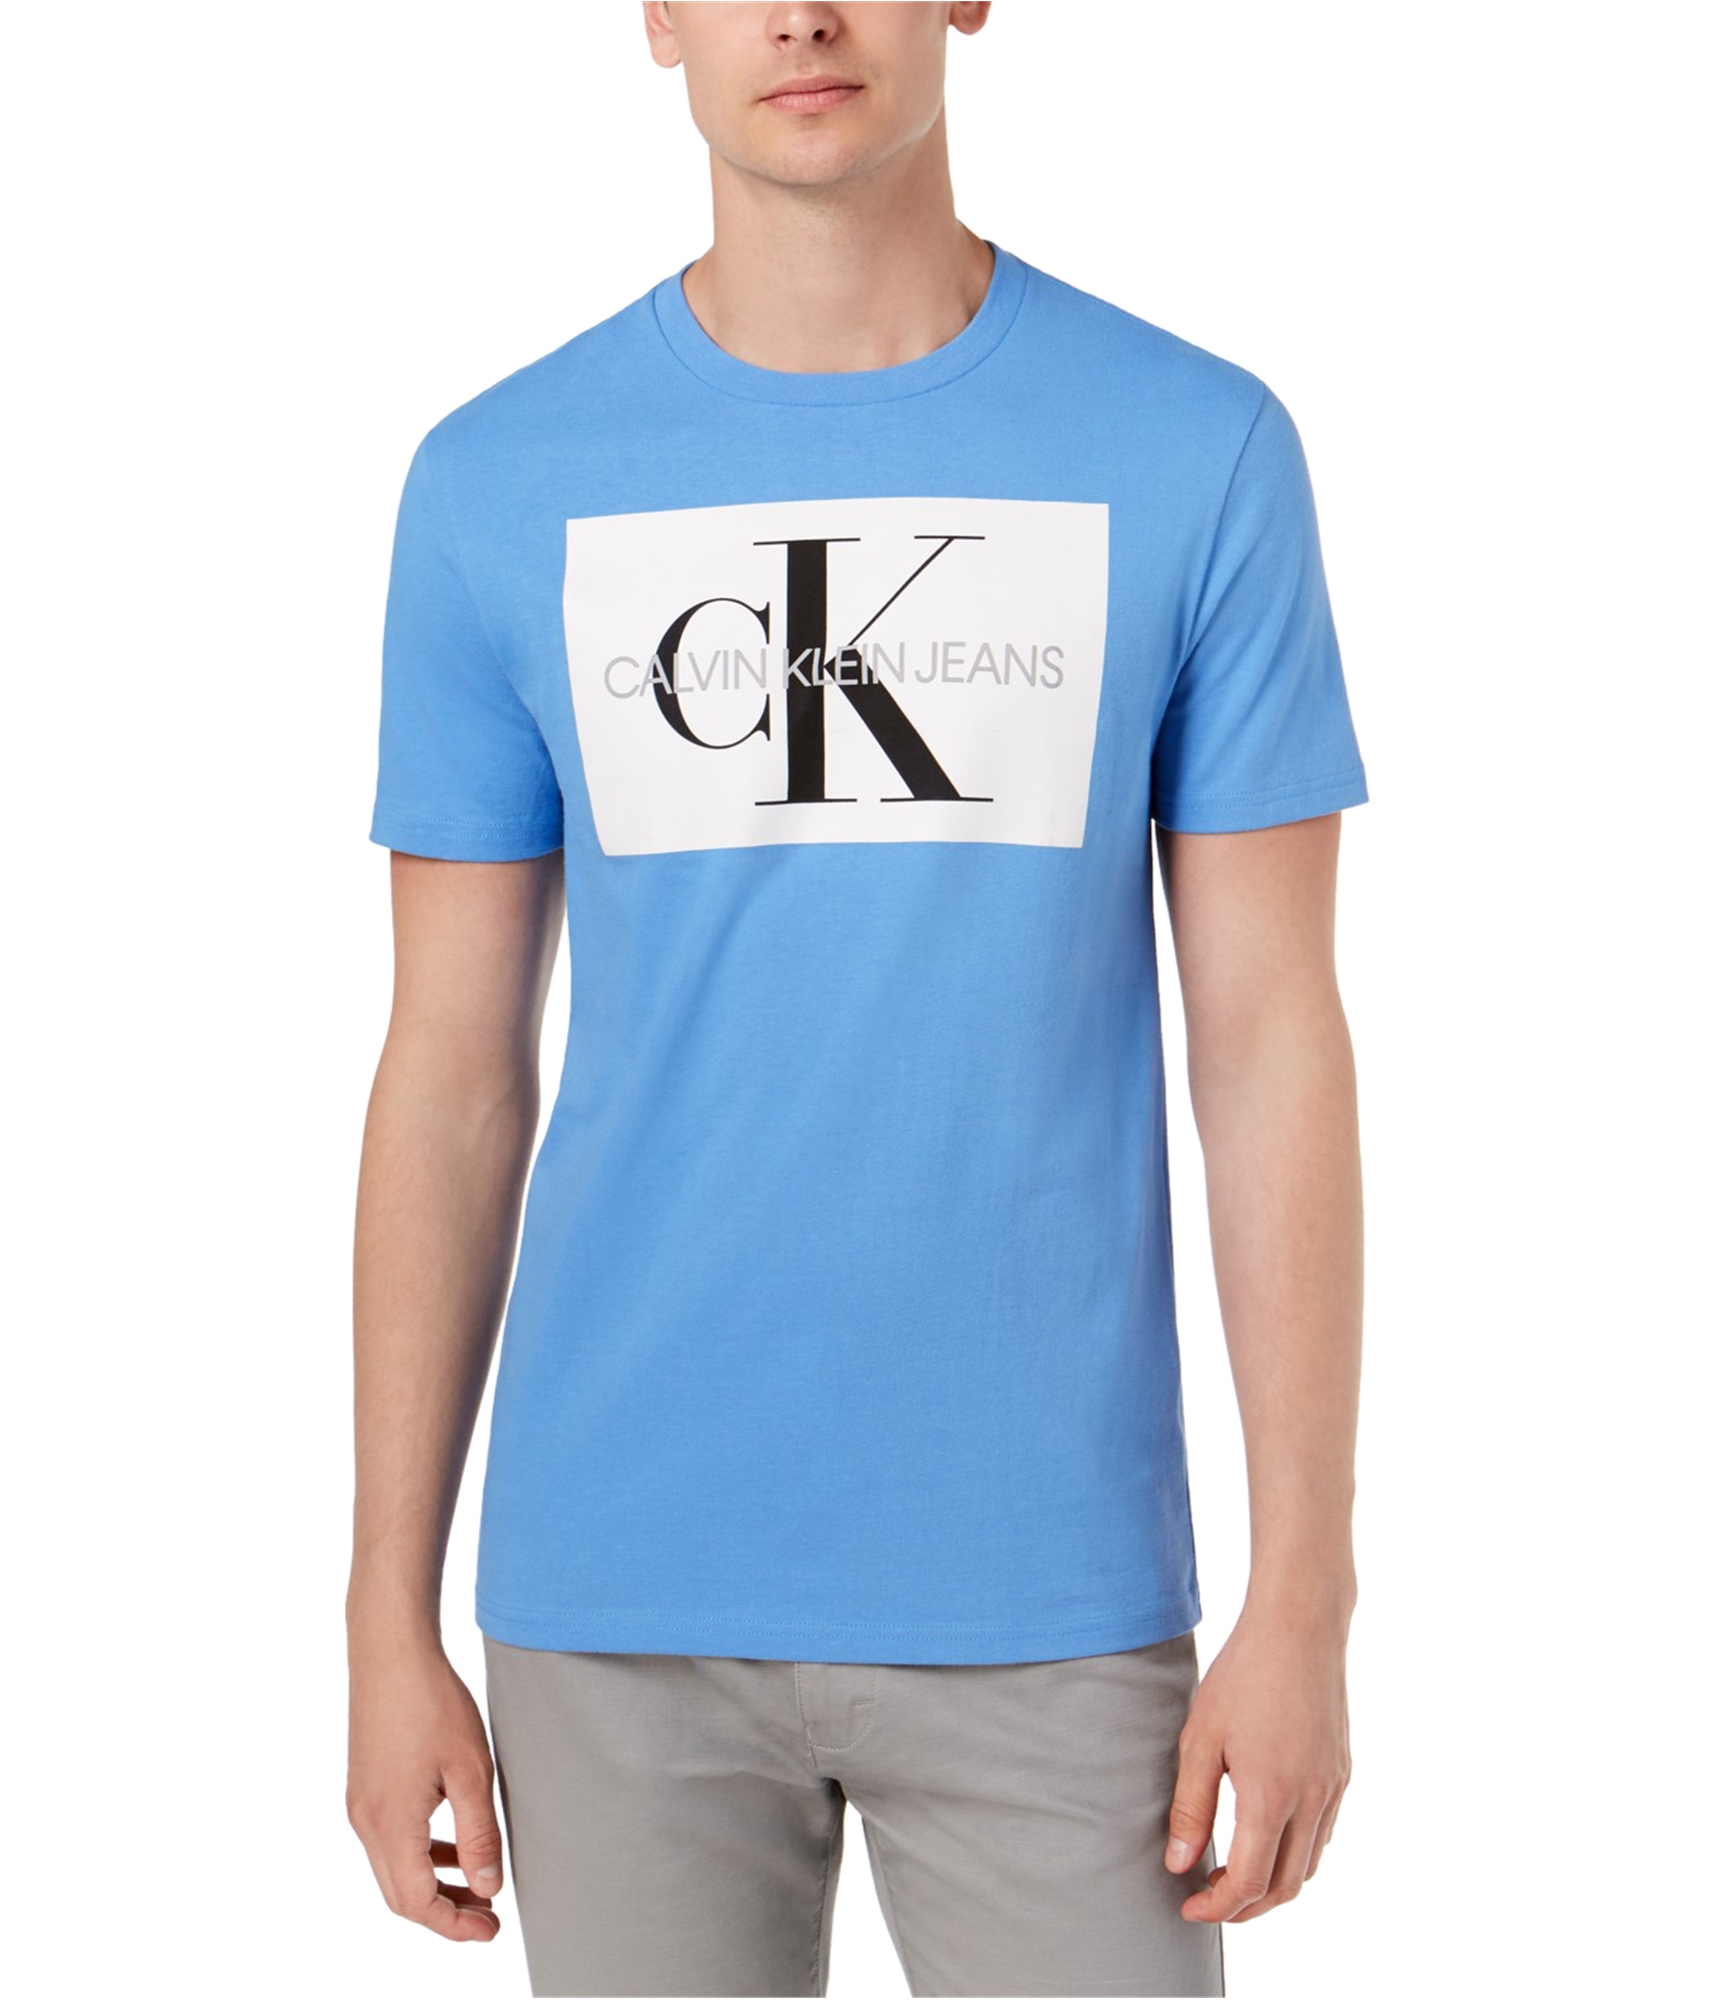 Calvin Klein Mens CK Logo Graphic T-Shirt, Blue, XX-Large | eBay